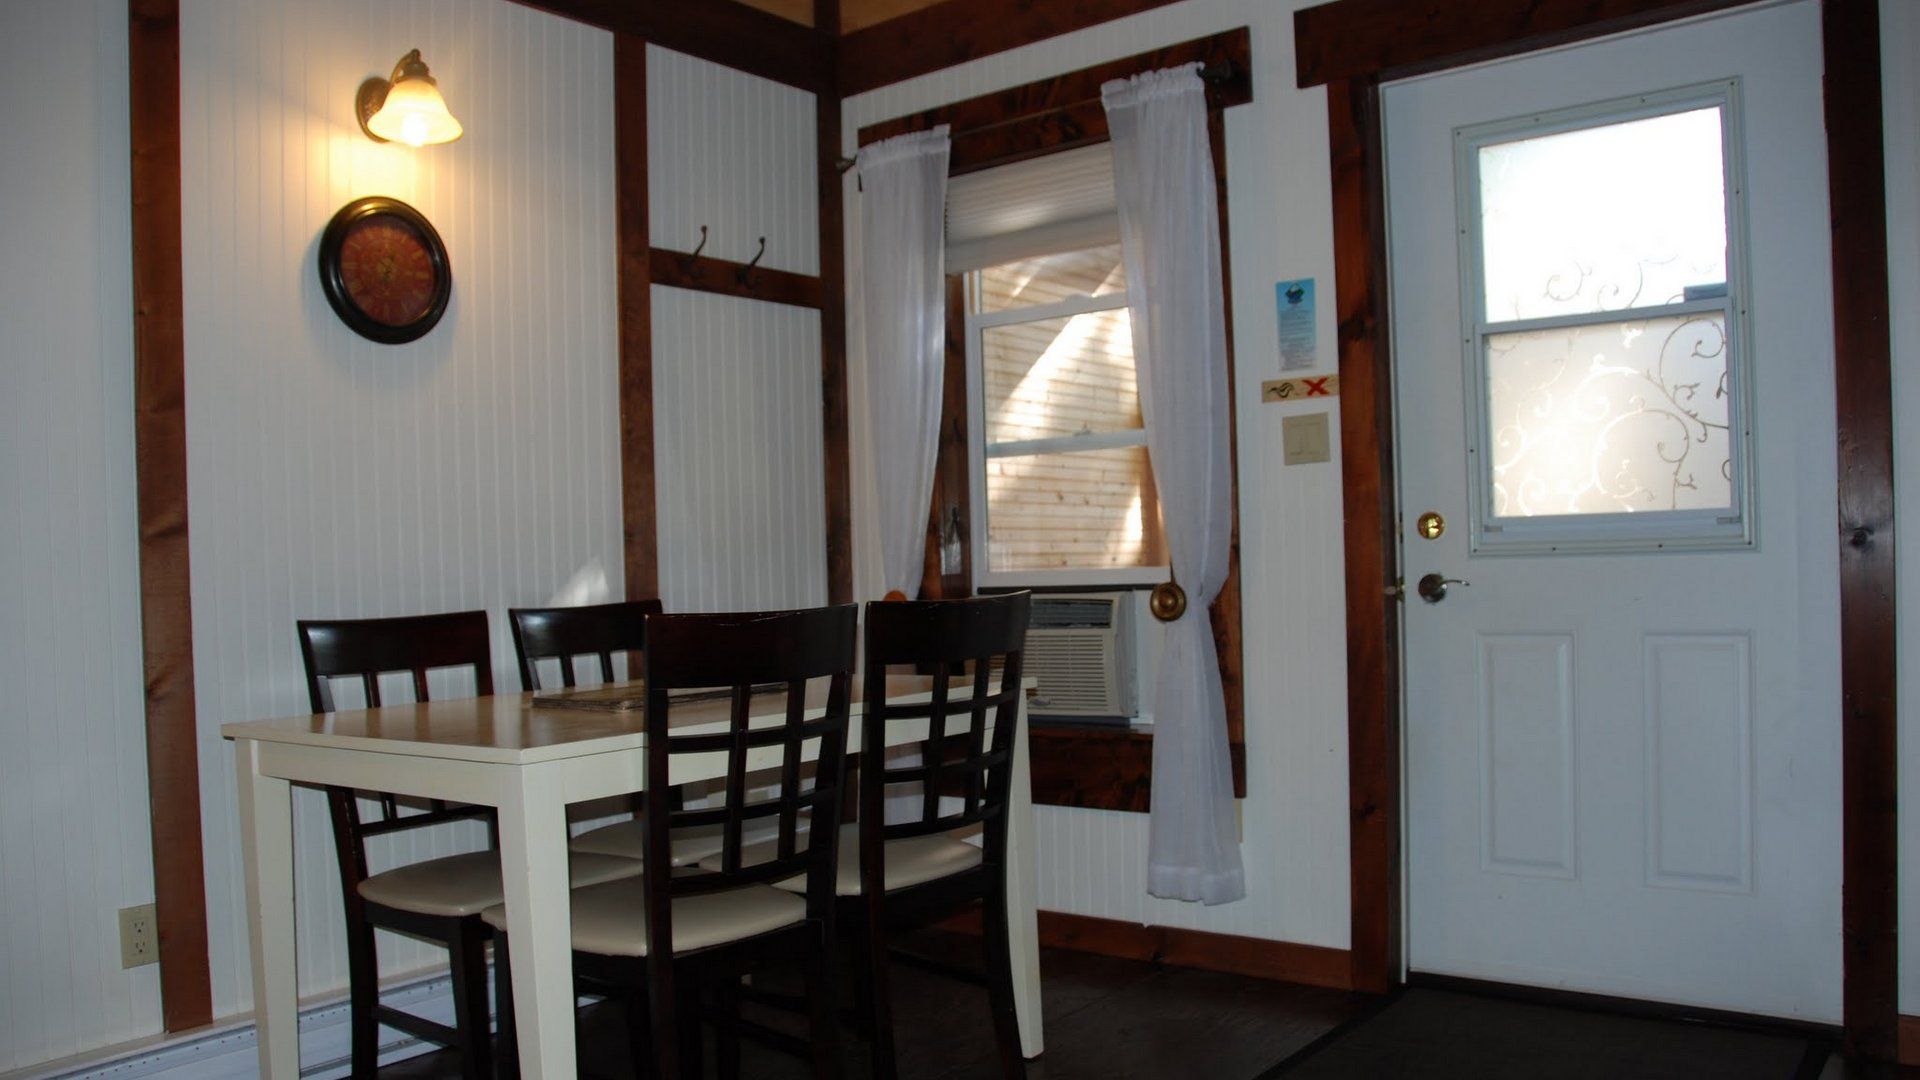 Dining area in Monashee Cabin.